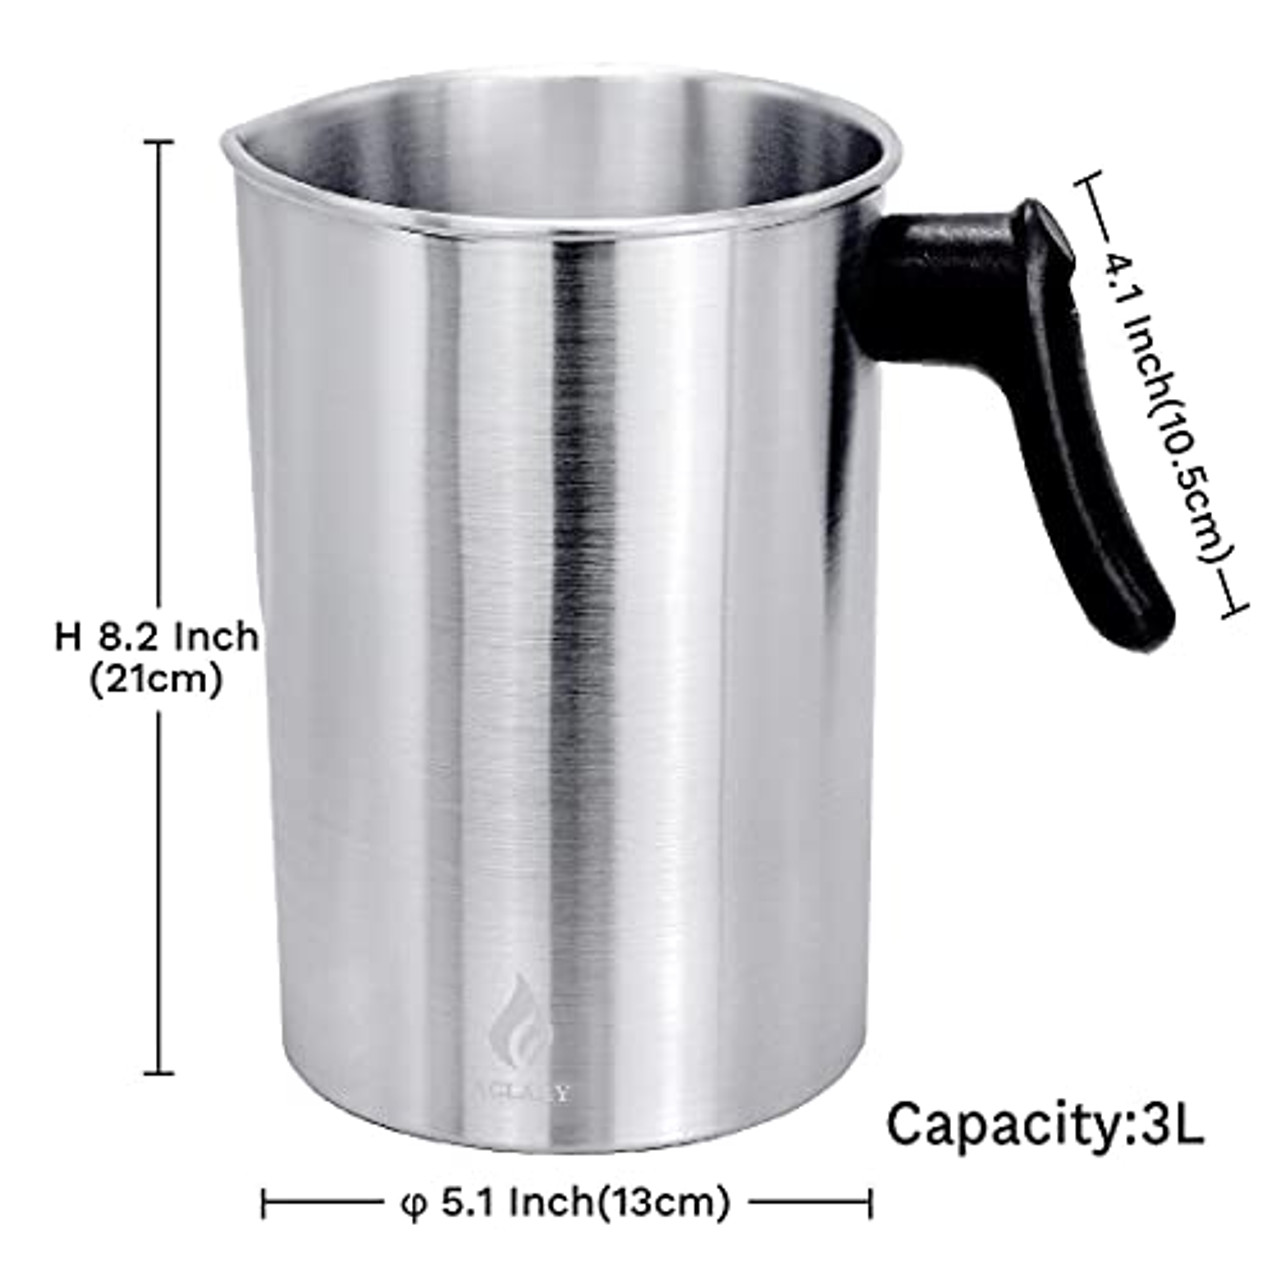 Coffee Culture 13 cm Milk Jug Thermometer